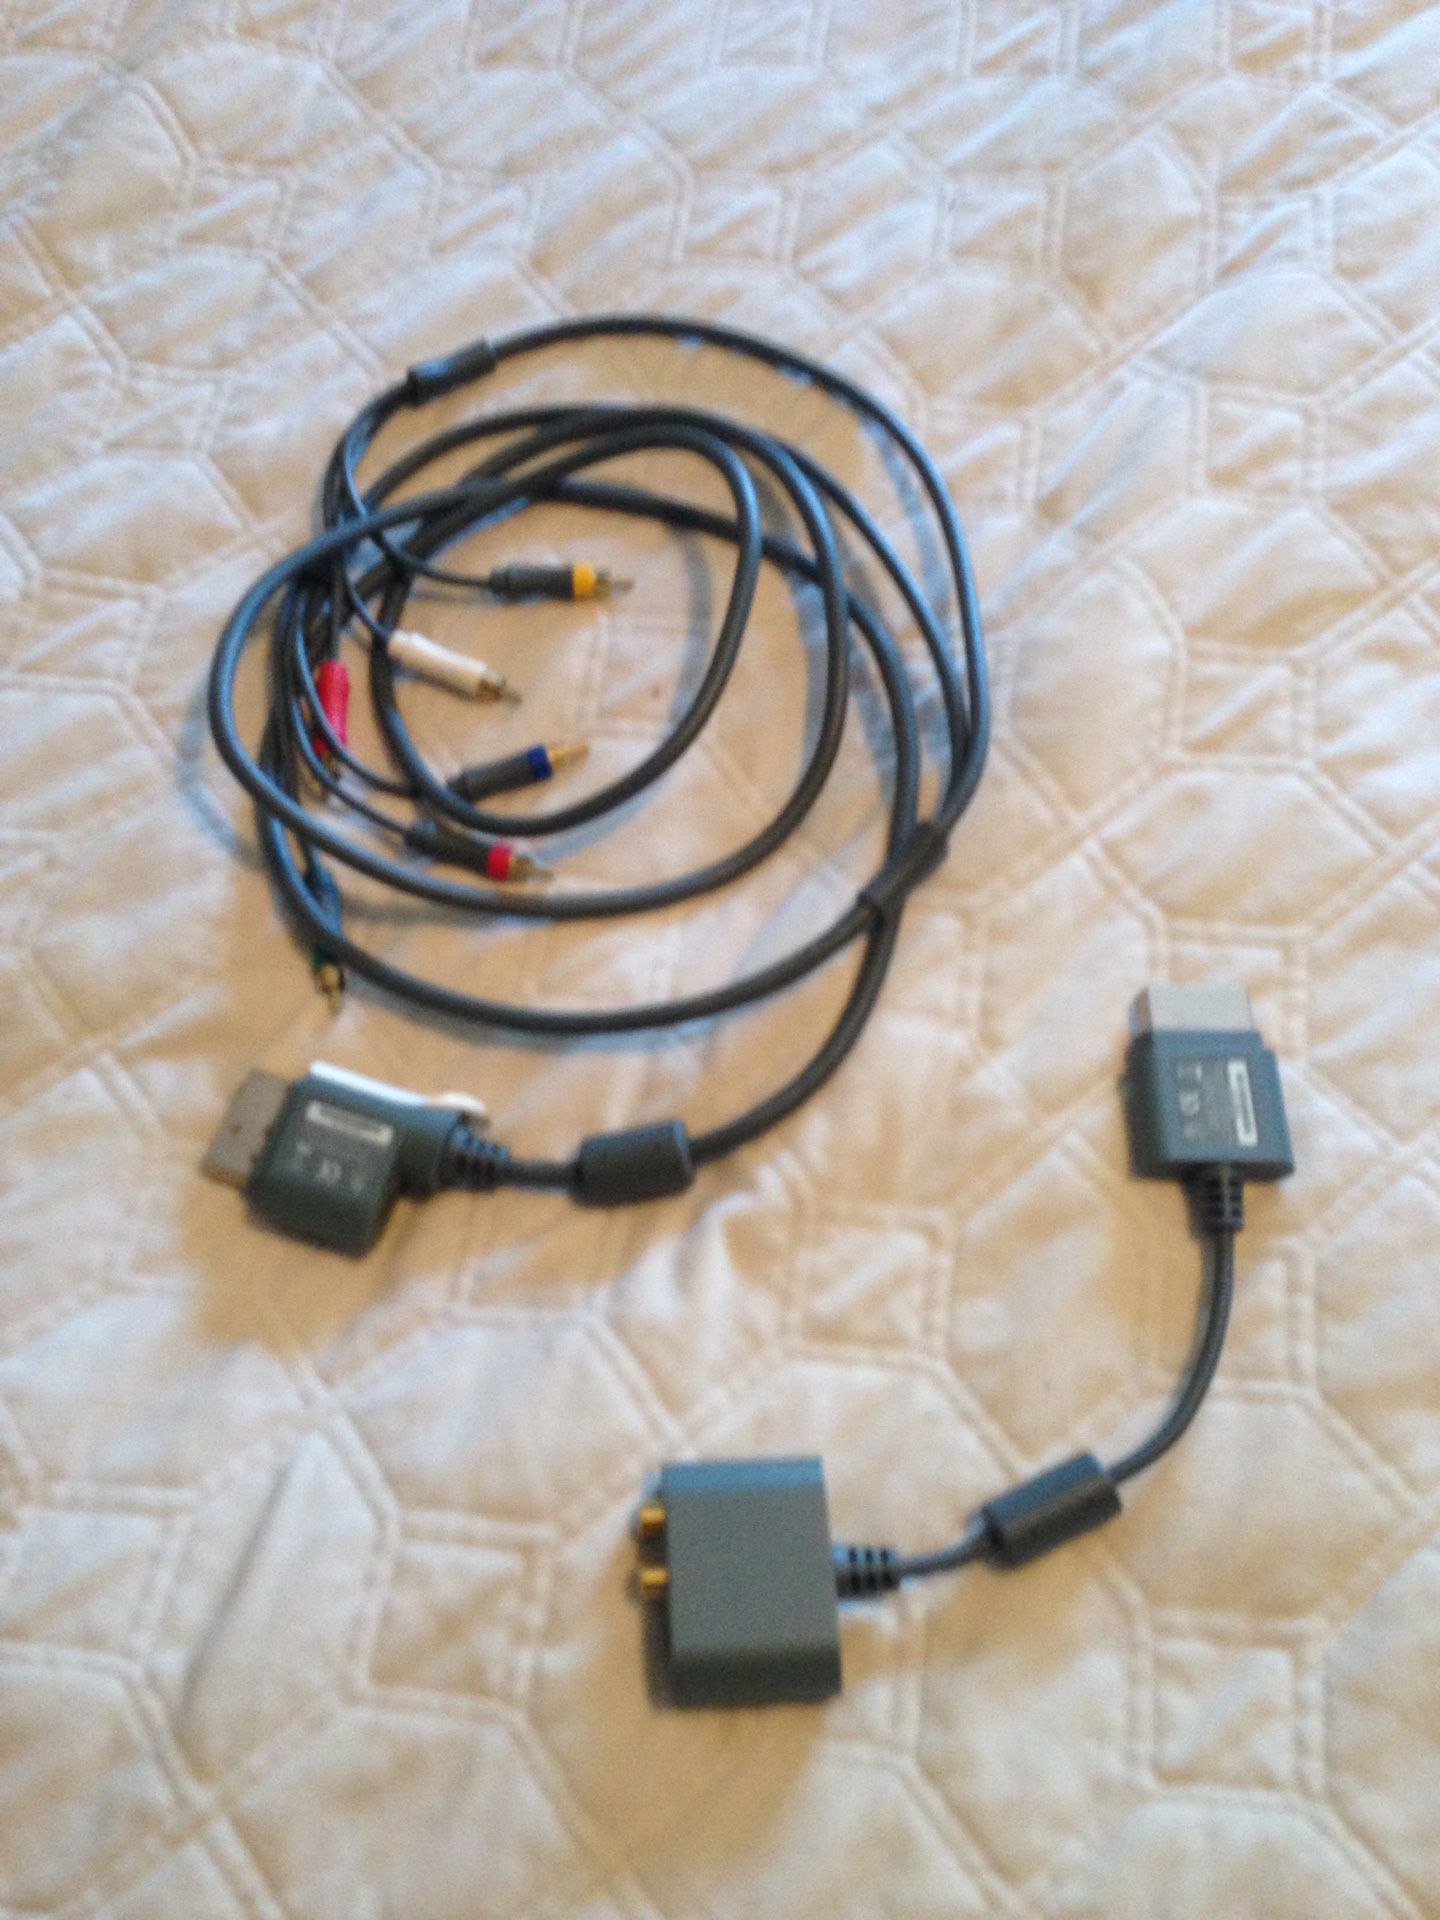 PlayStation cords